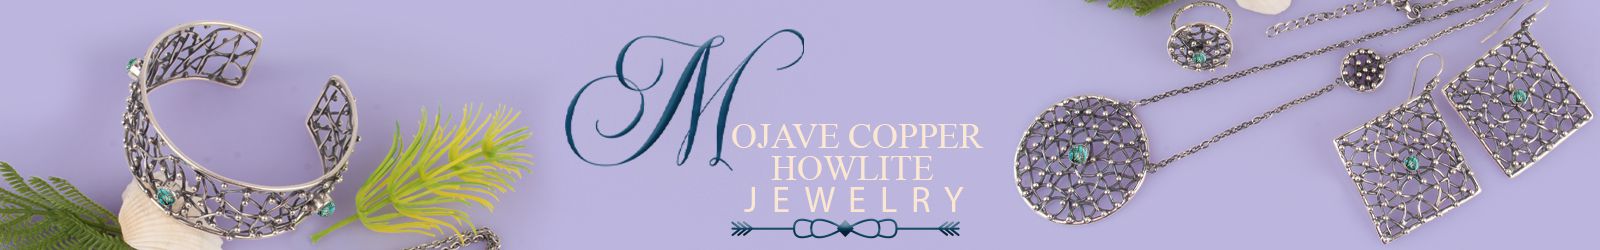 Silver Mojave Copper Howlite Jewelry Wholesale Supplier